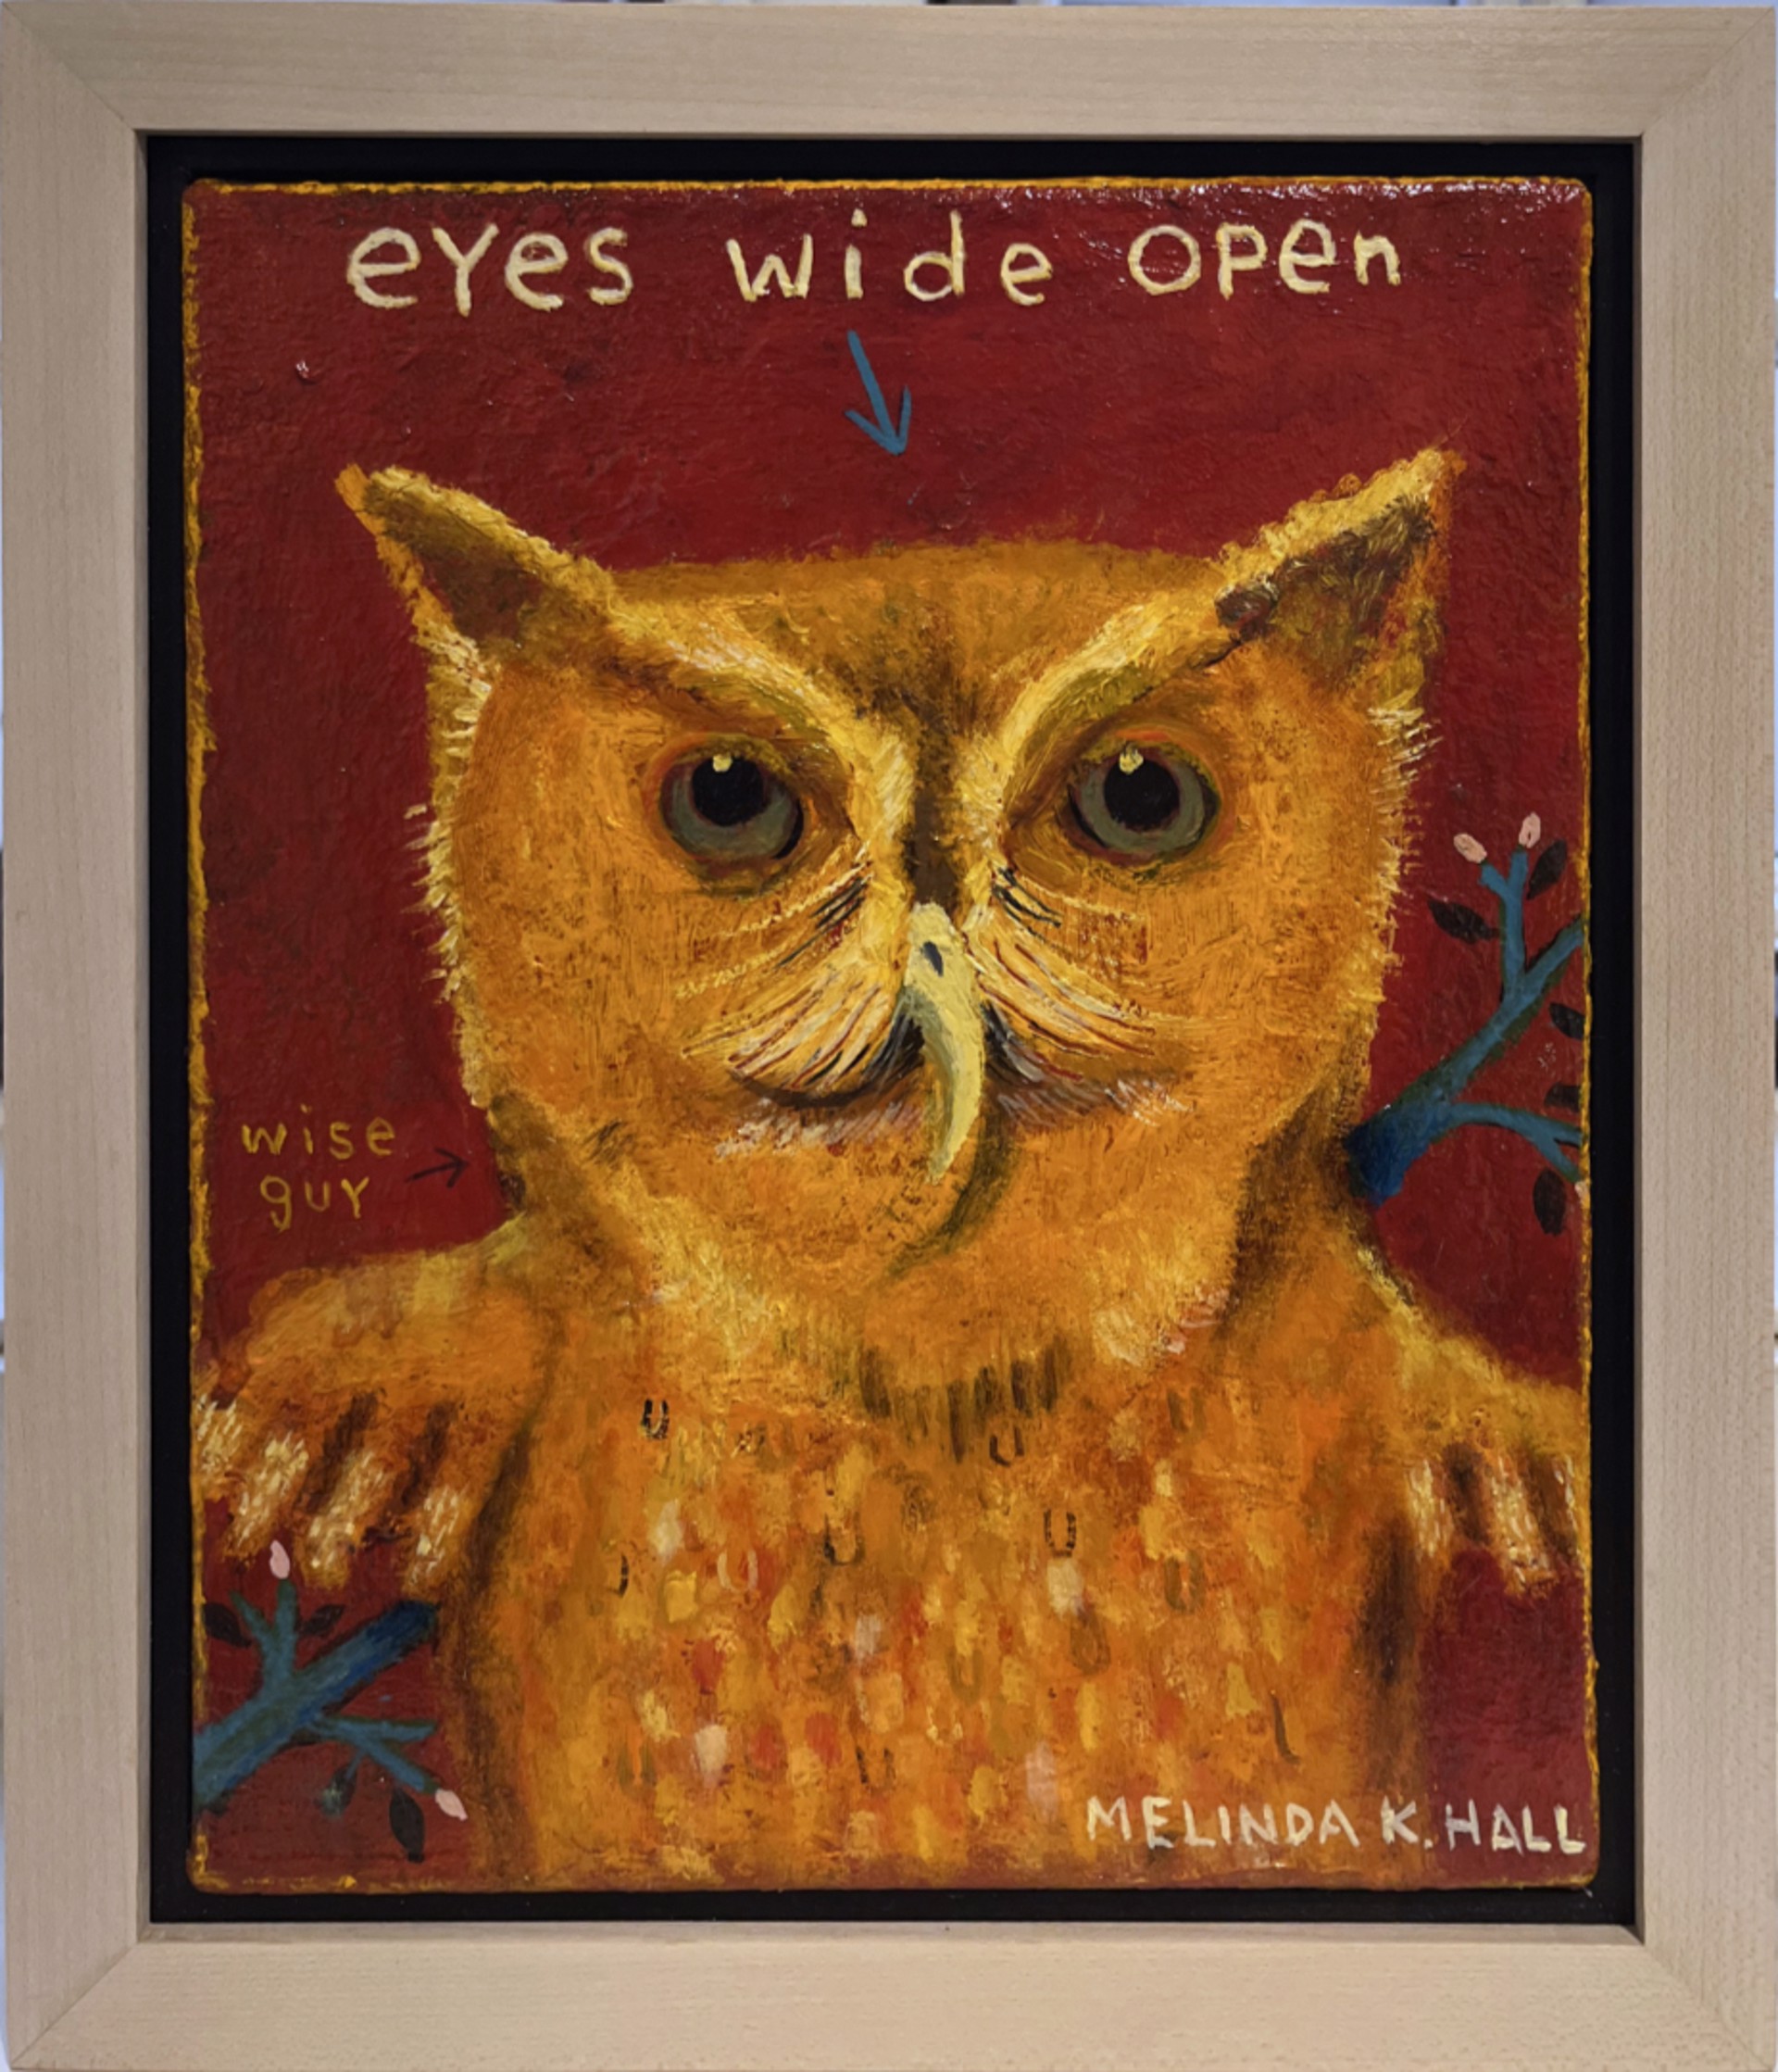 Eyes Wide Open by Melinda K. Hall